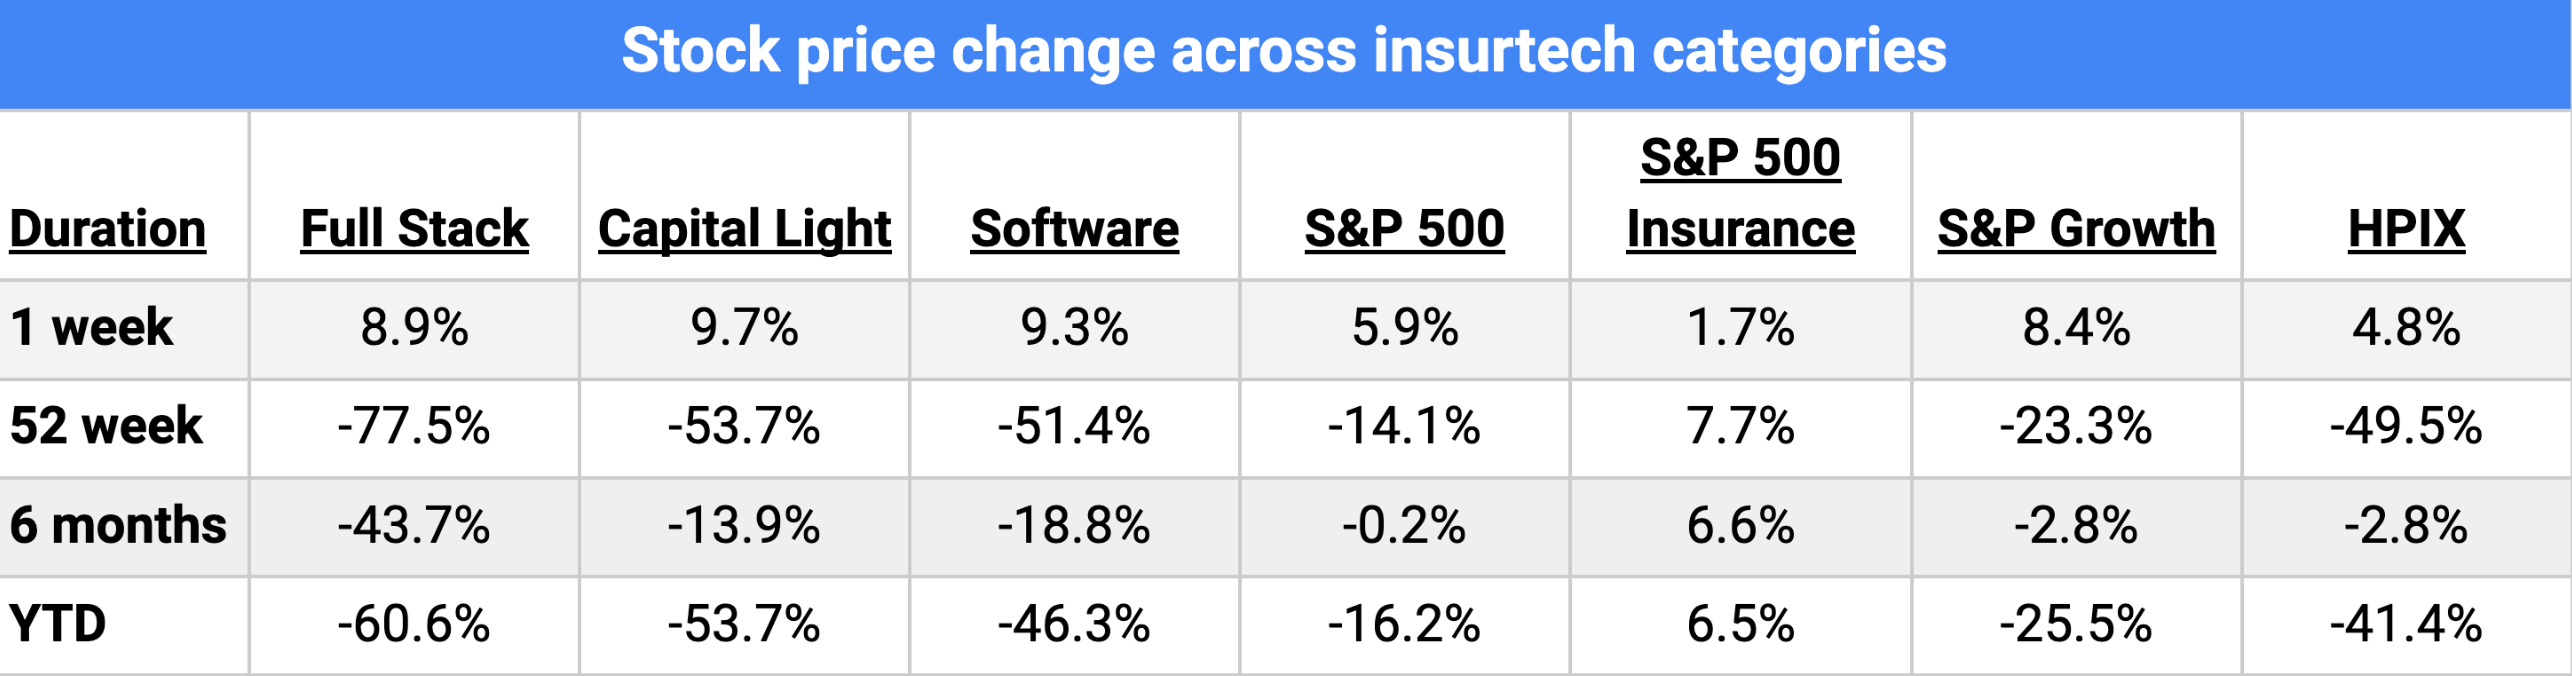 Stock price change across insurtech categories